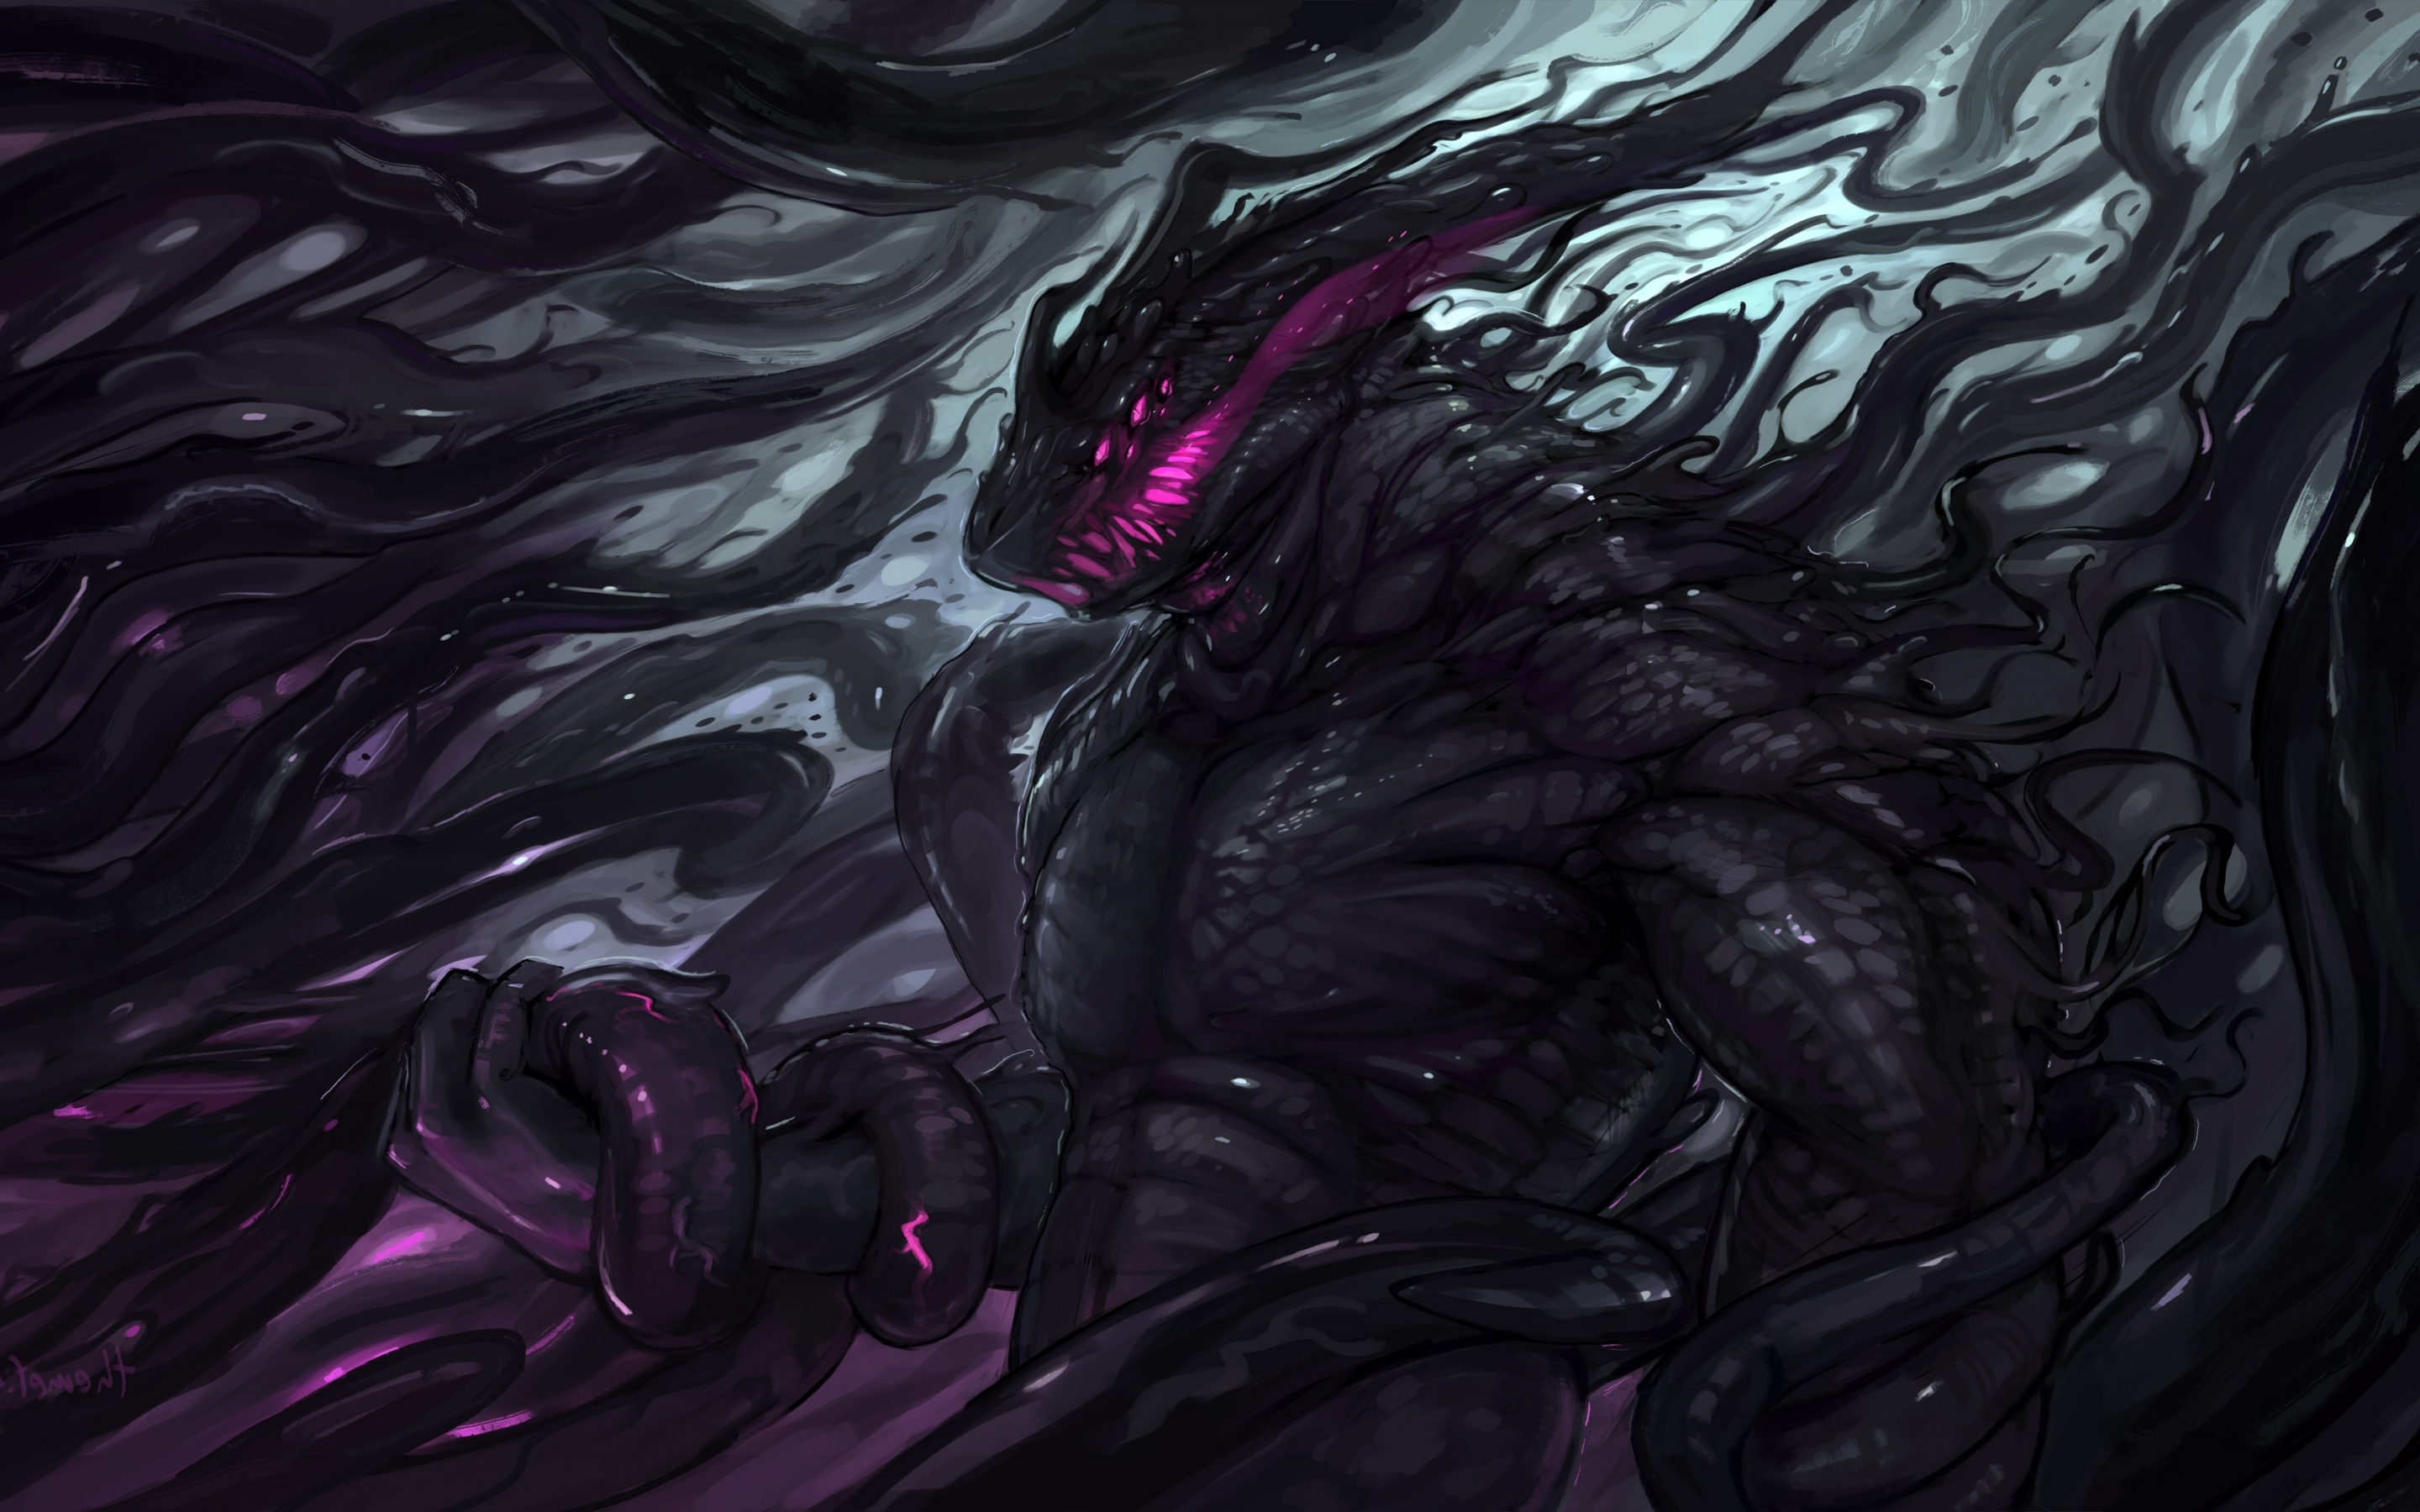 Download x1800 Wallpaper Dark Fantasy Creature Monster Art Mac Pro Retaia Image Background